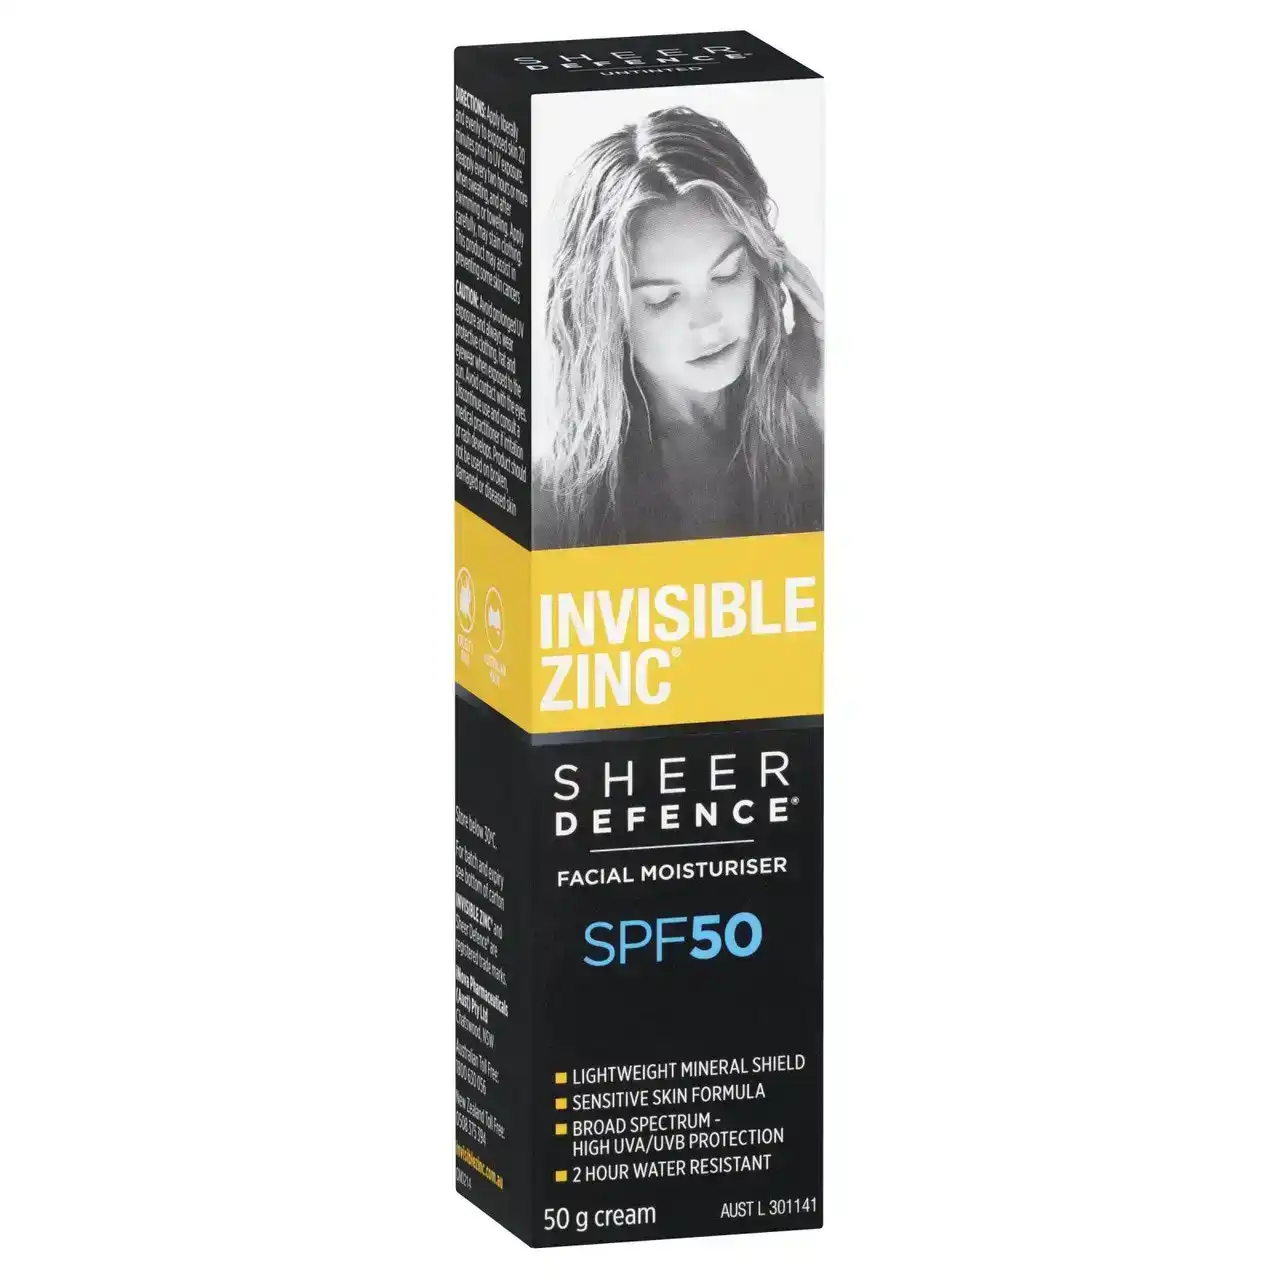 Invisible Zinc Sheer Defence SPF 50 Facial Moisturiser 50g